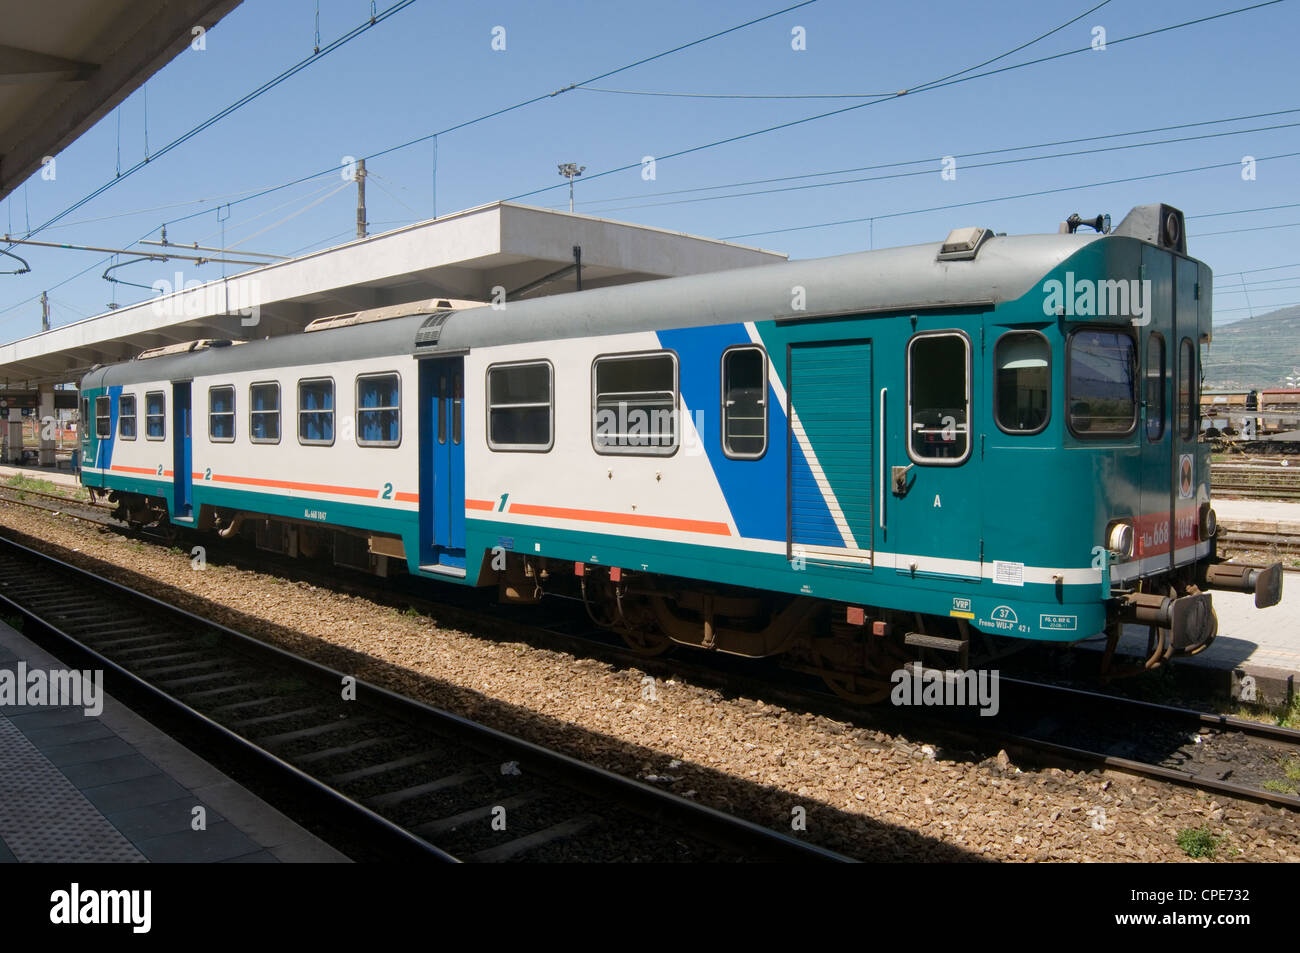 commuter train trains in italy regional italian railways railway Stock Photo